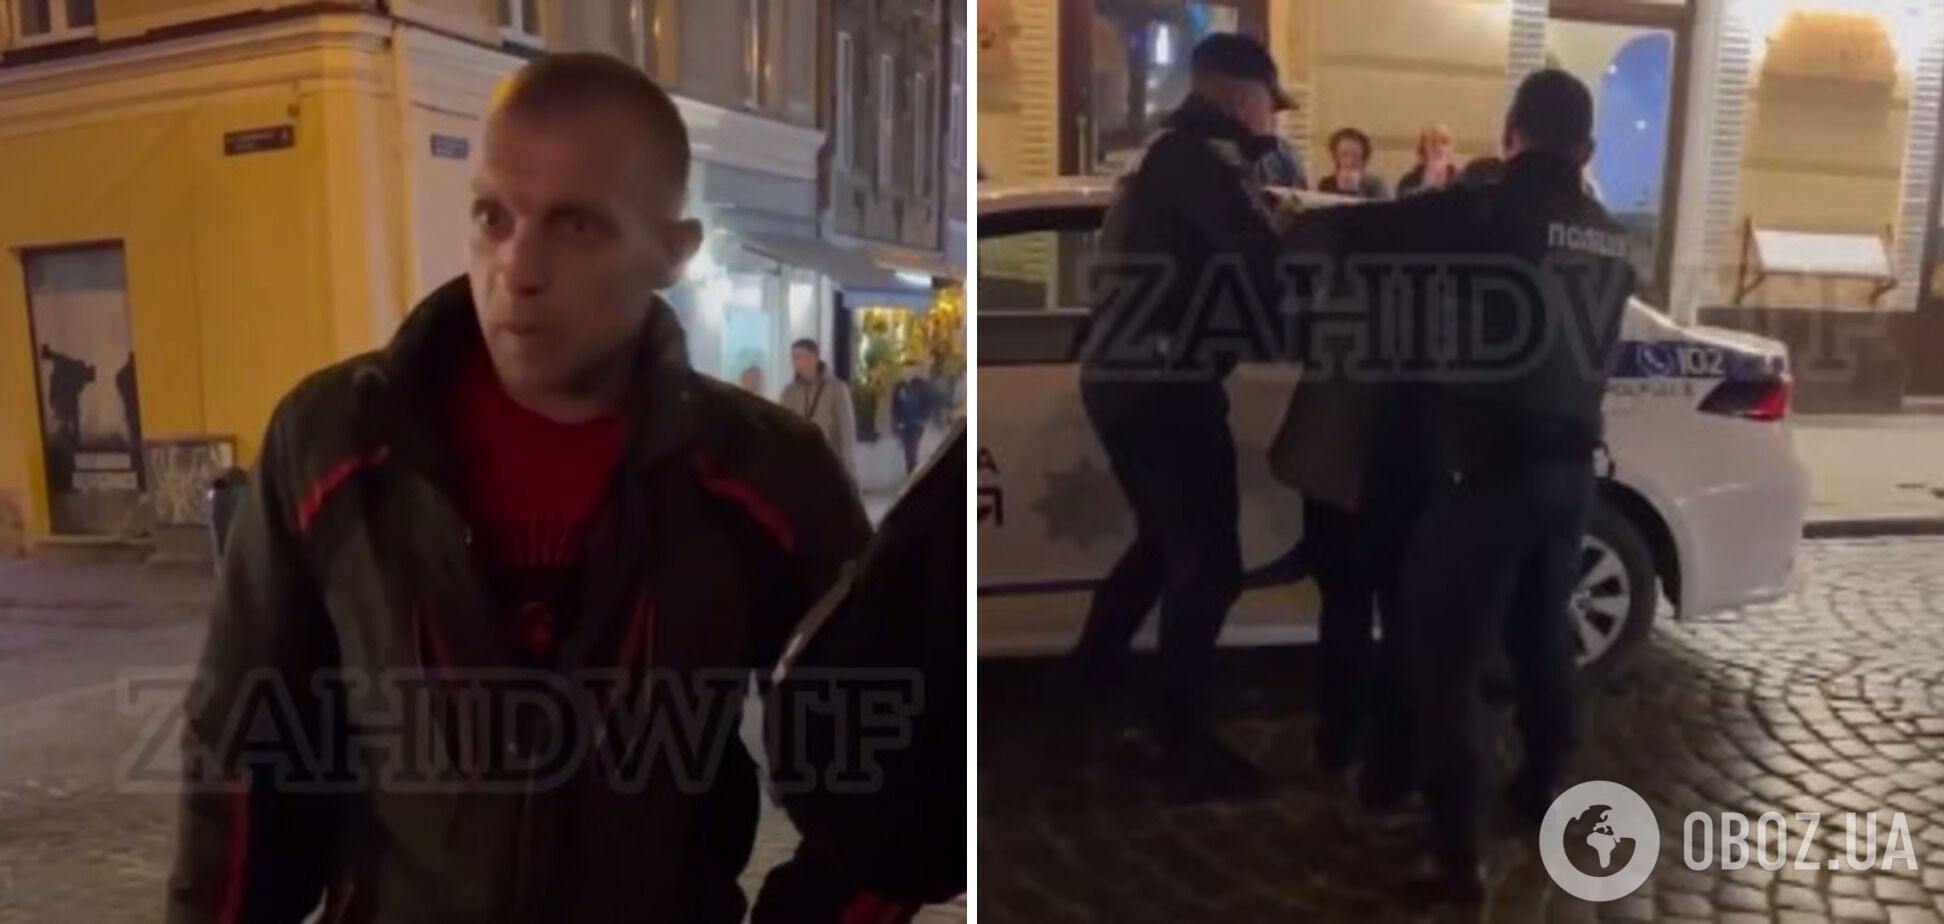 В центре Львова мужчина на всю громкость включил песни Шатунова и поплатился. Видео